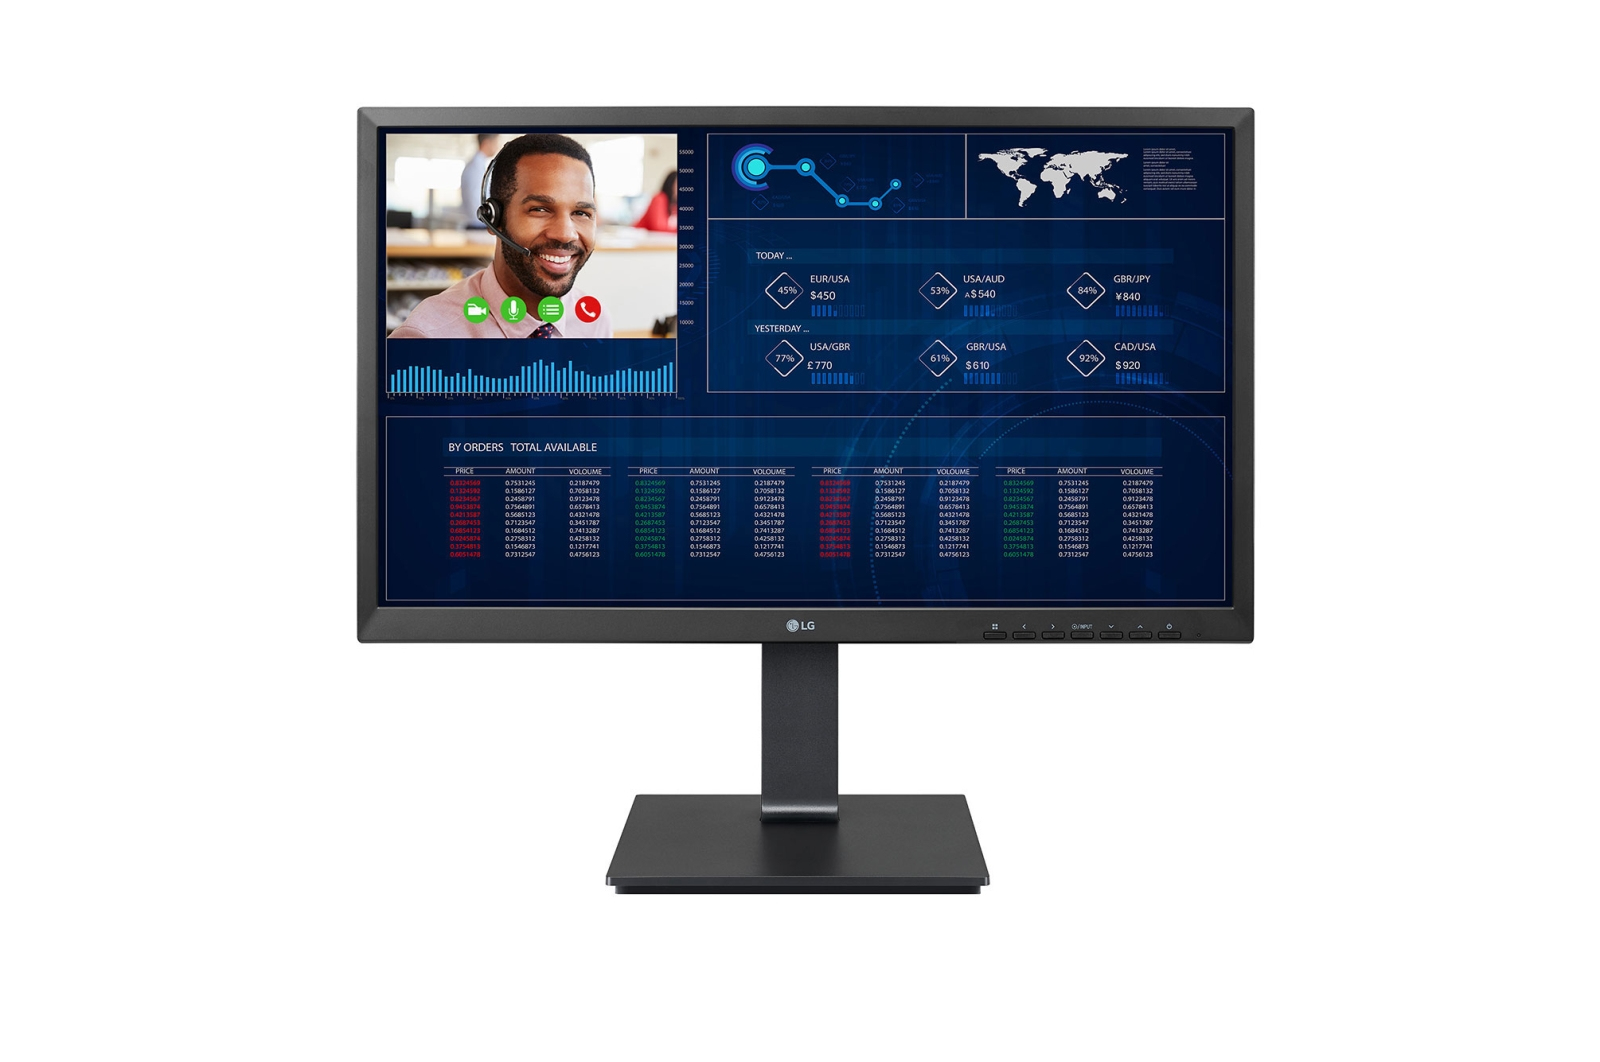 LG 24CN650N-6A computer monitor